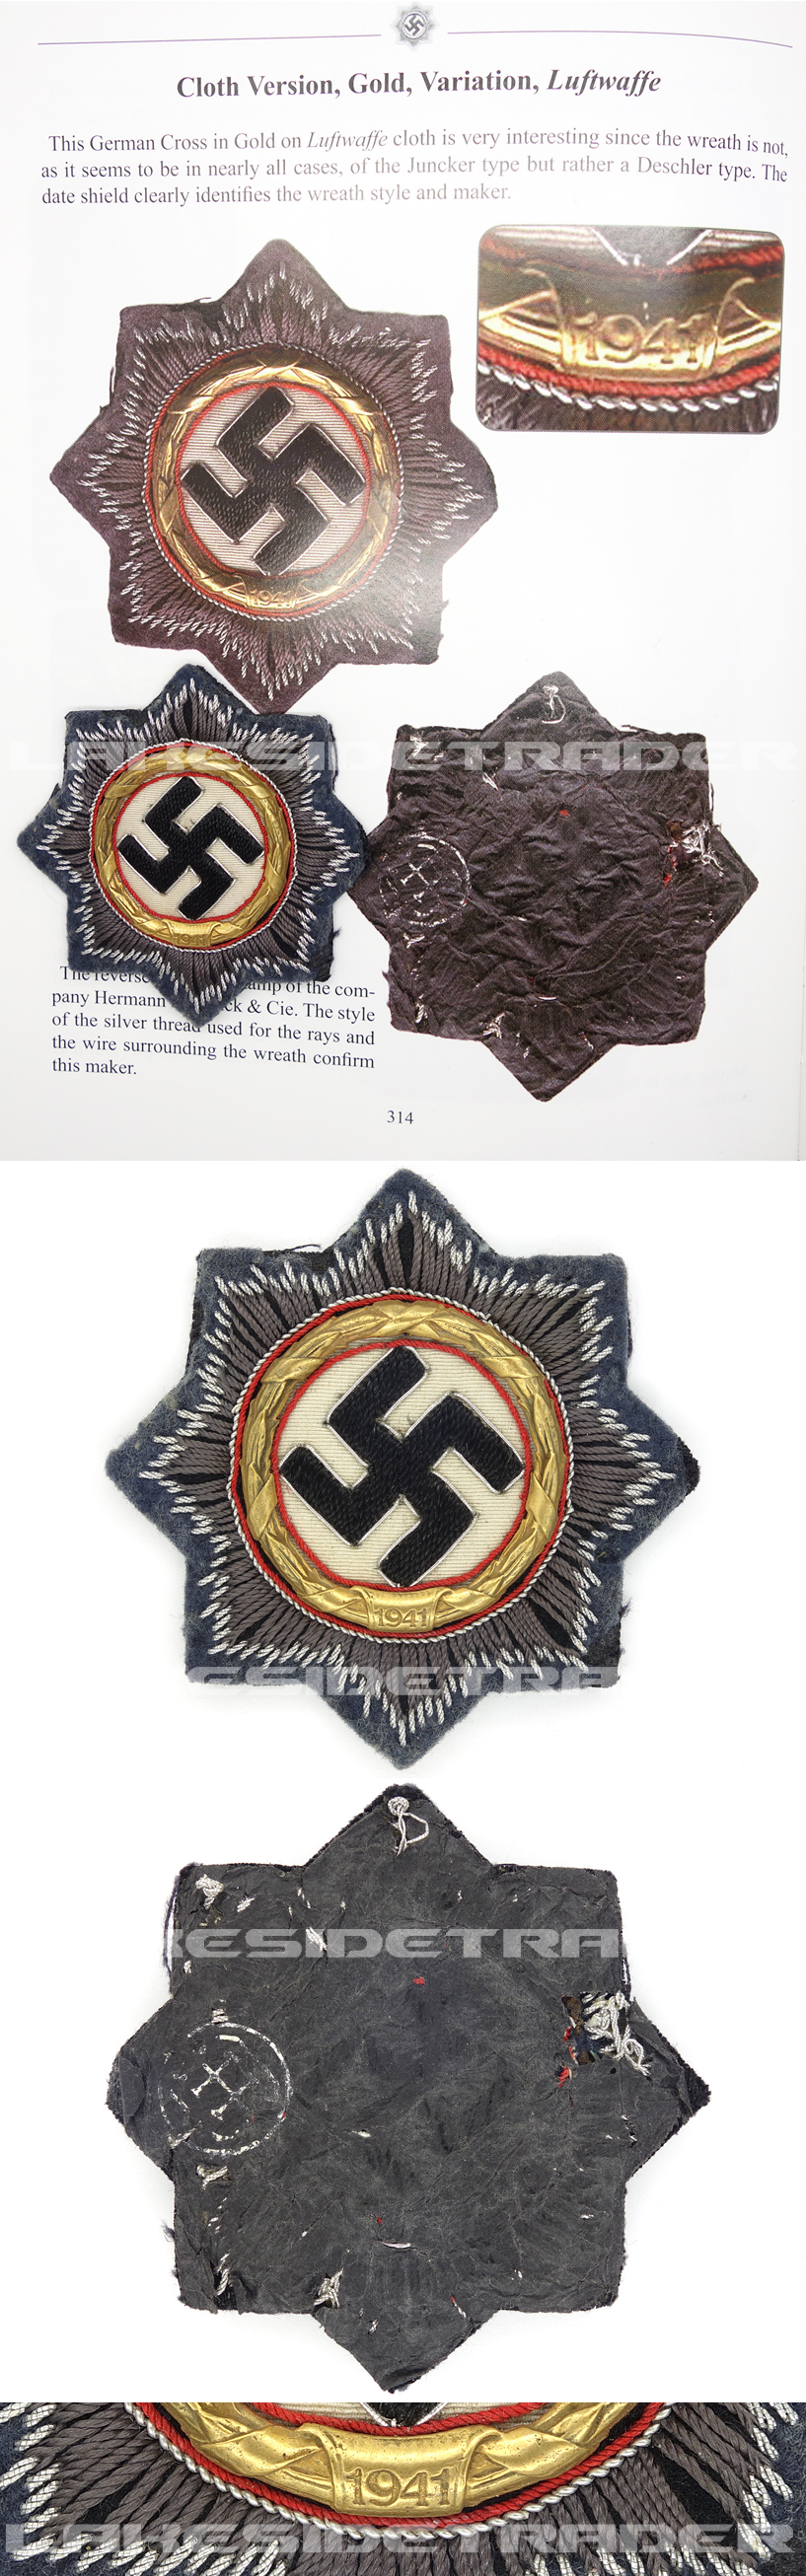 THE Textbook Example – Deschler Wreath Luftwaffe DKiG by HS